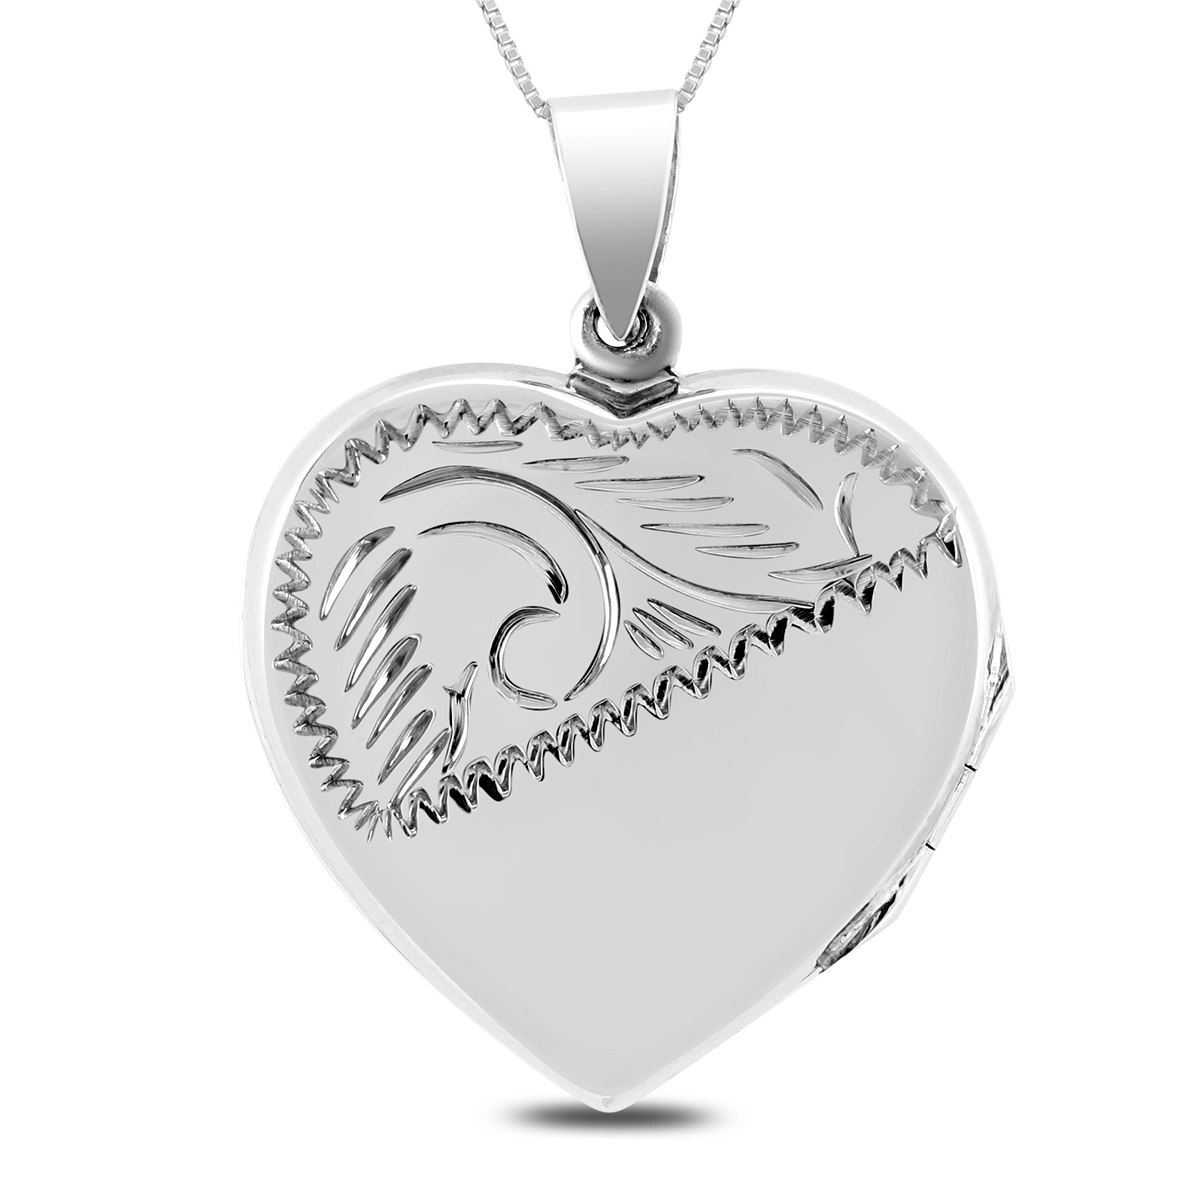 Engraved Heart Locket Pendant in .925 Sterling Silver